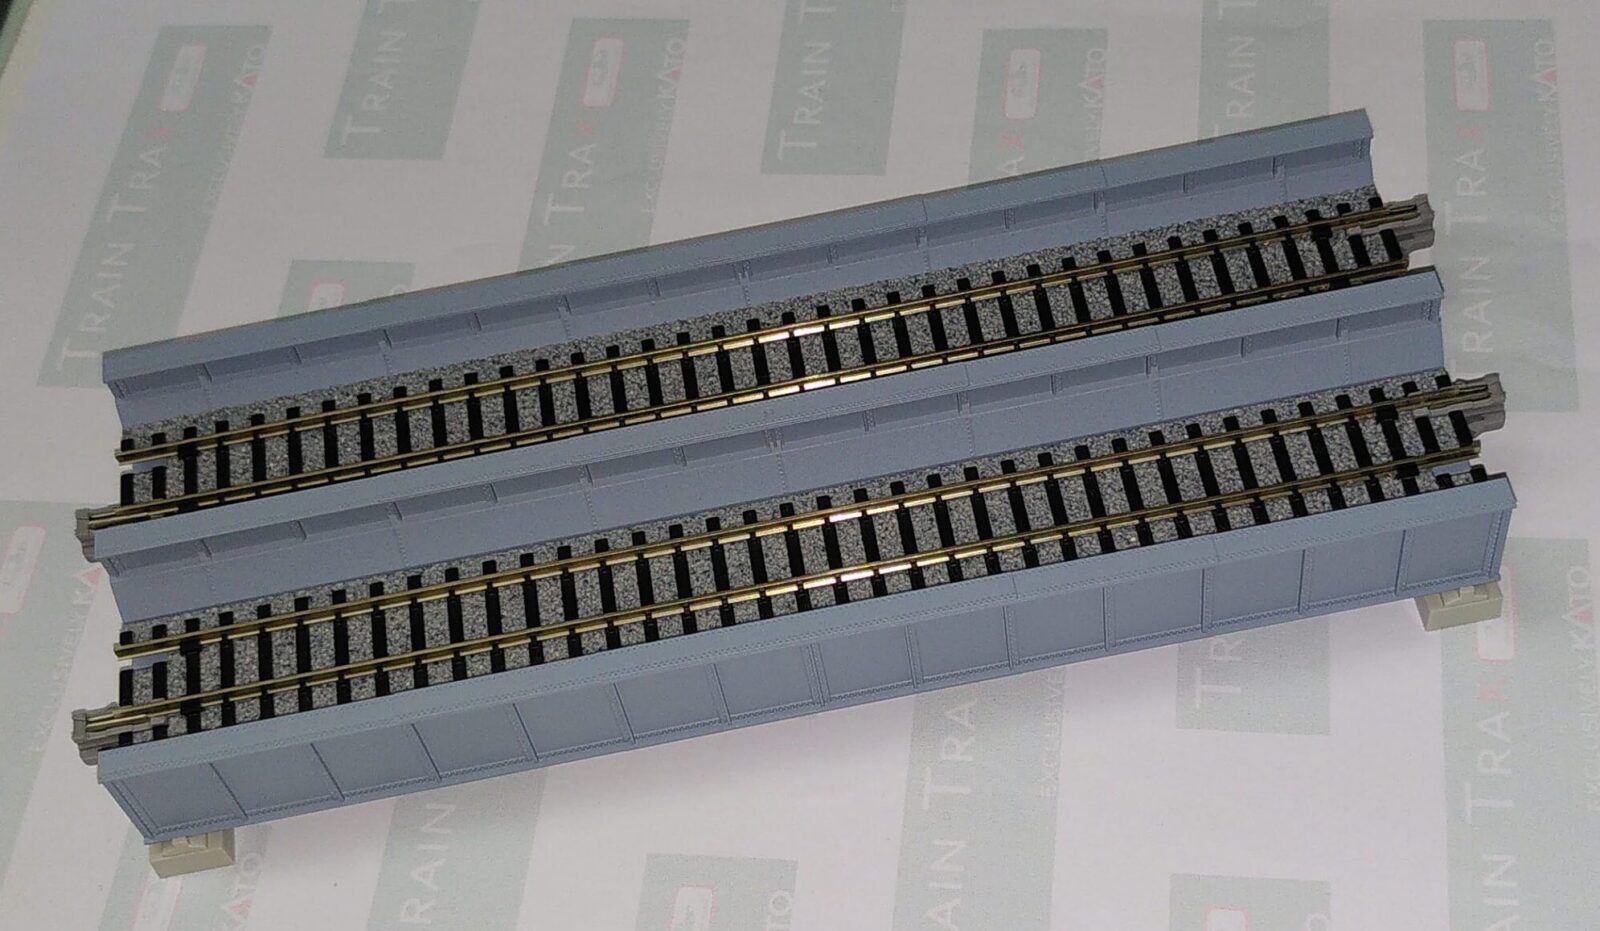 KATO 20-457 Ws186t Gray Double Plate Girder Bridge 186mm 1 PC N Scale for sale online 